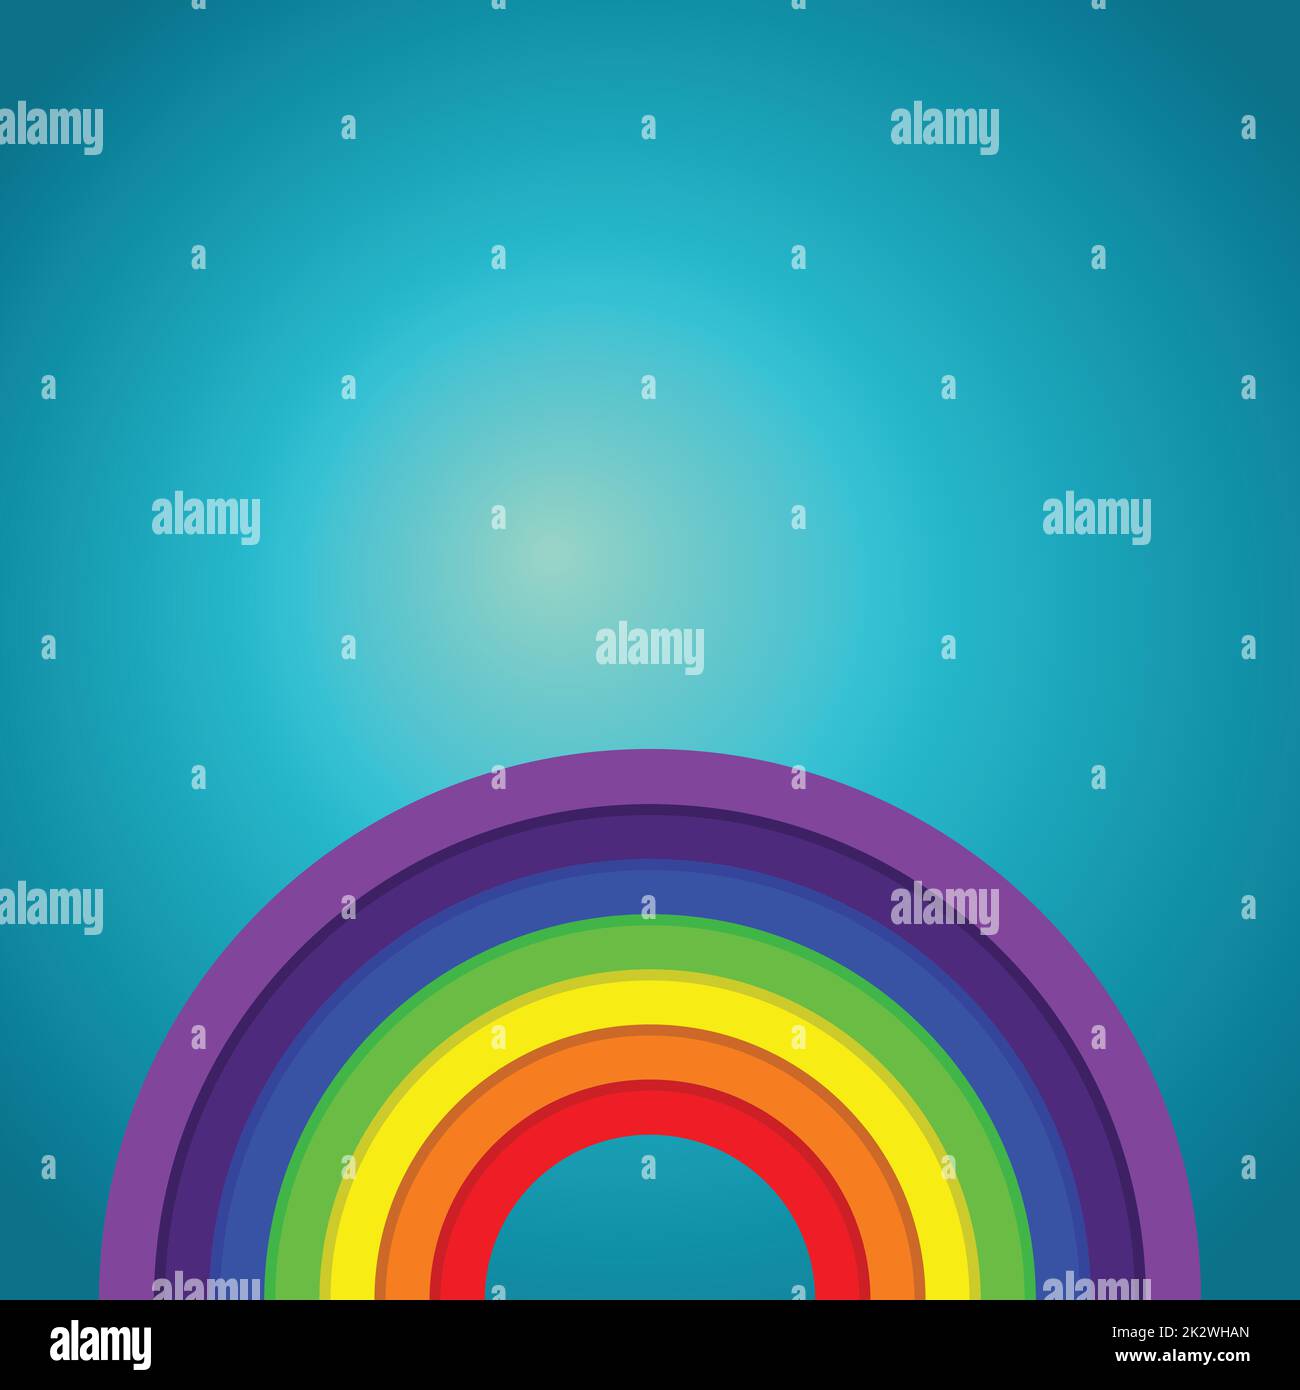 Rainbow shaped as semicircular arc on blue background Stock Vector